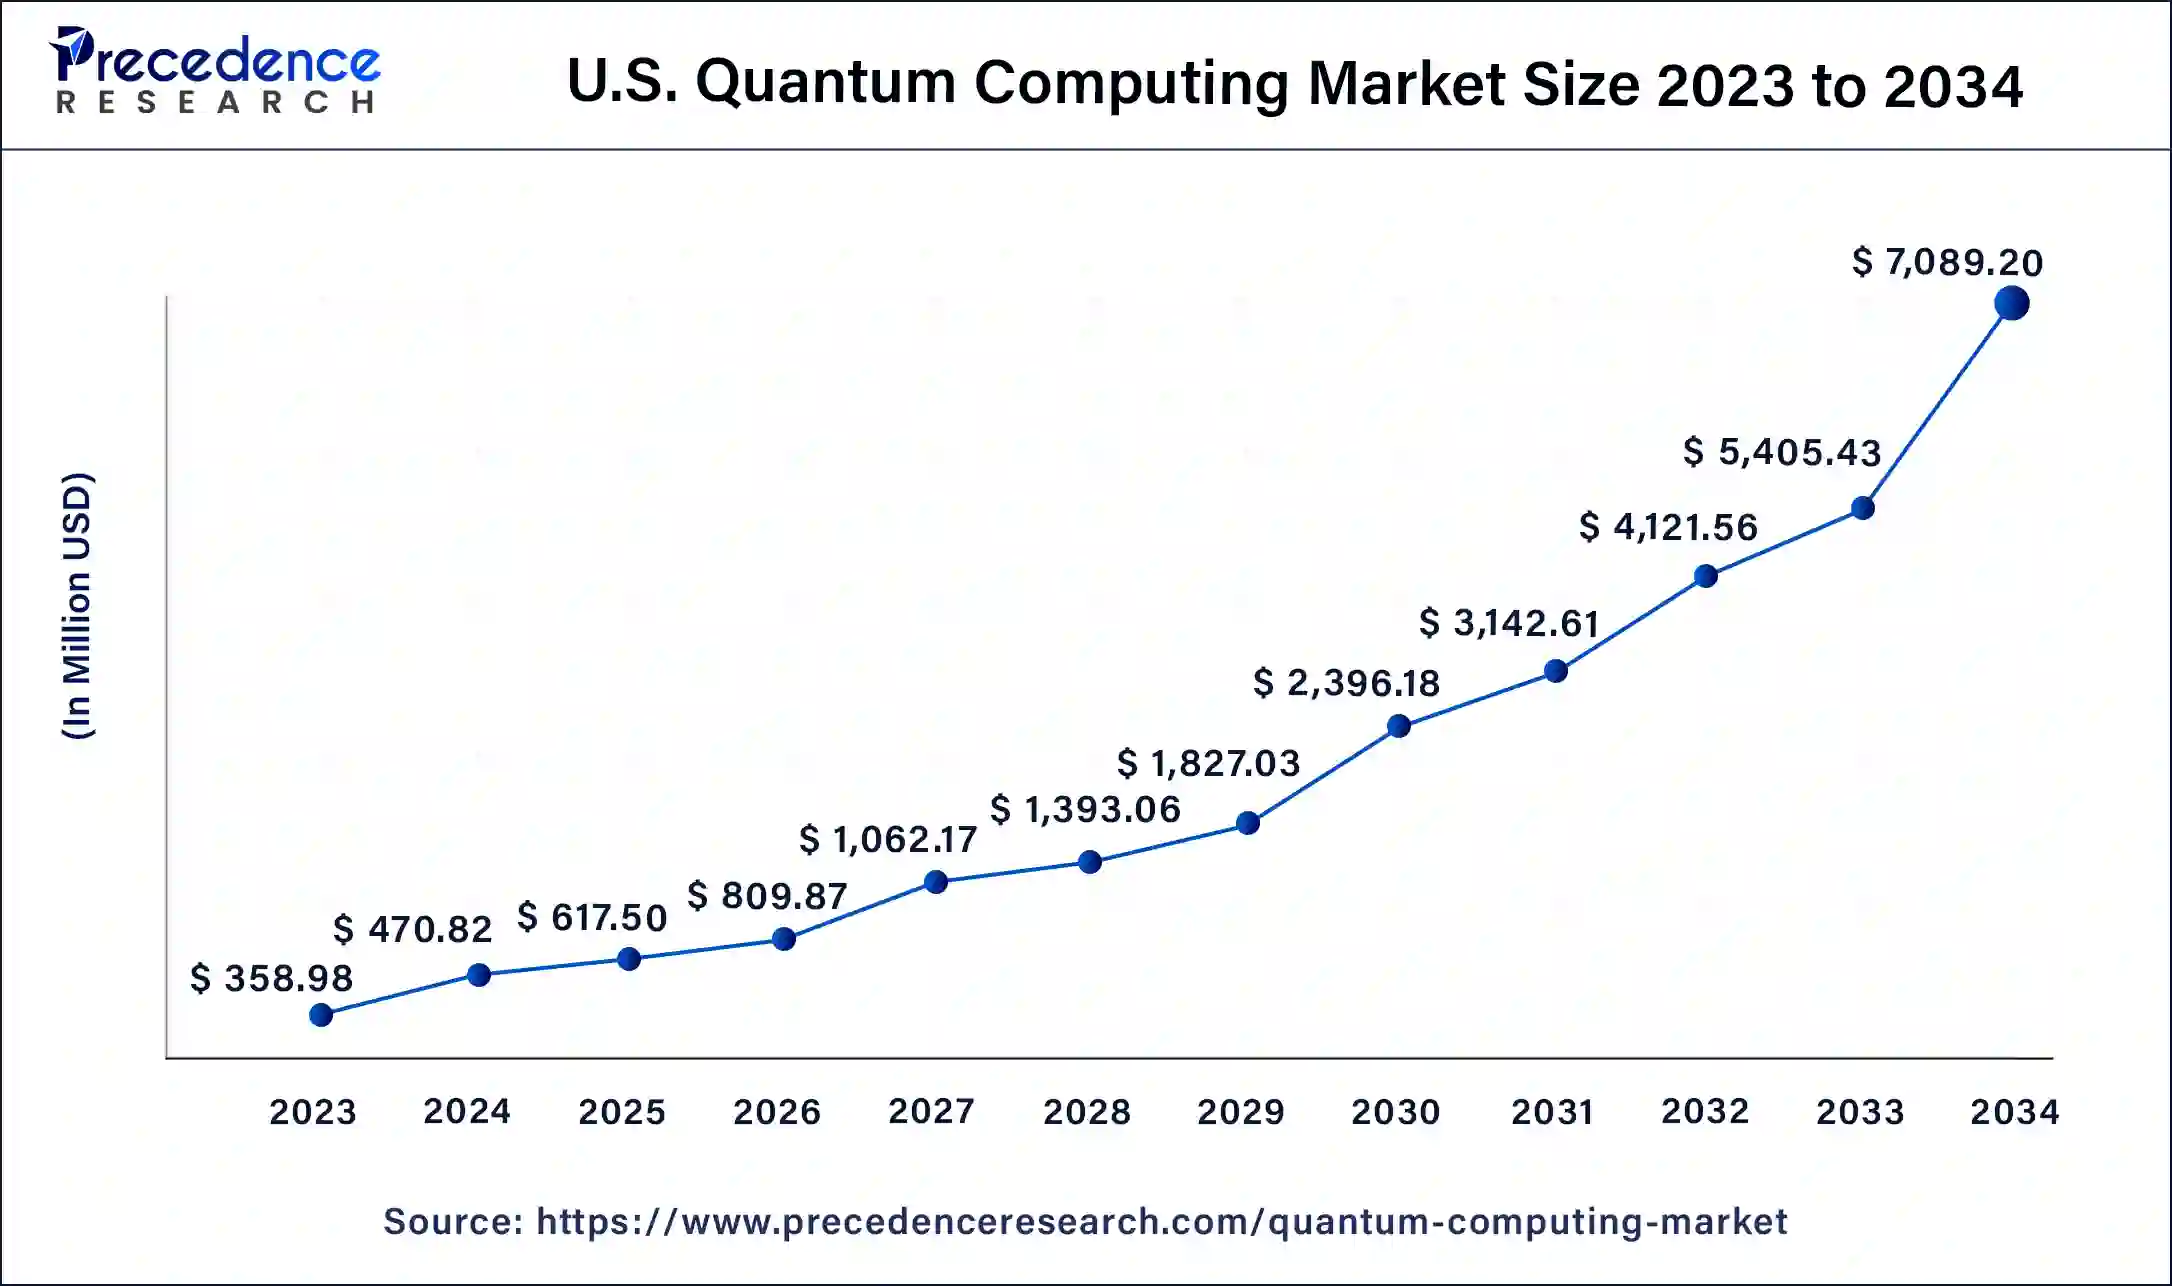 U.S. Quantum Computing Market Size 2024 to 2034